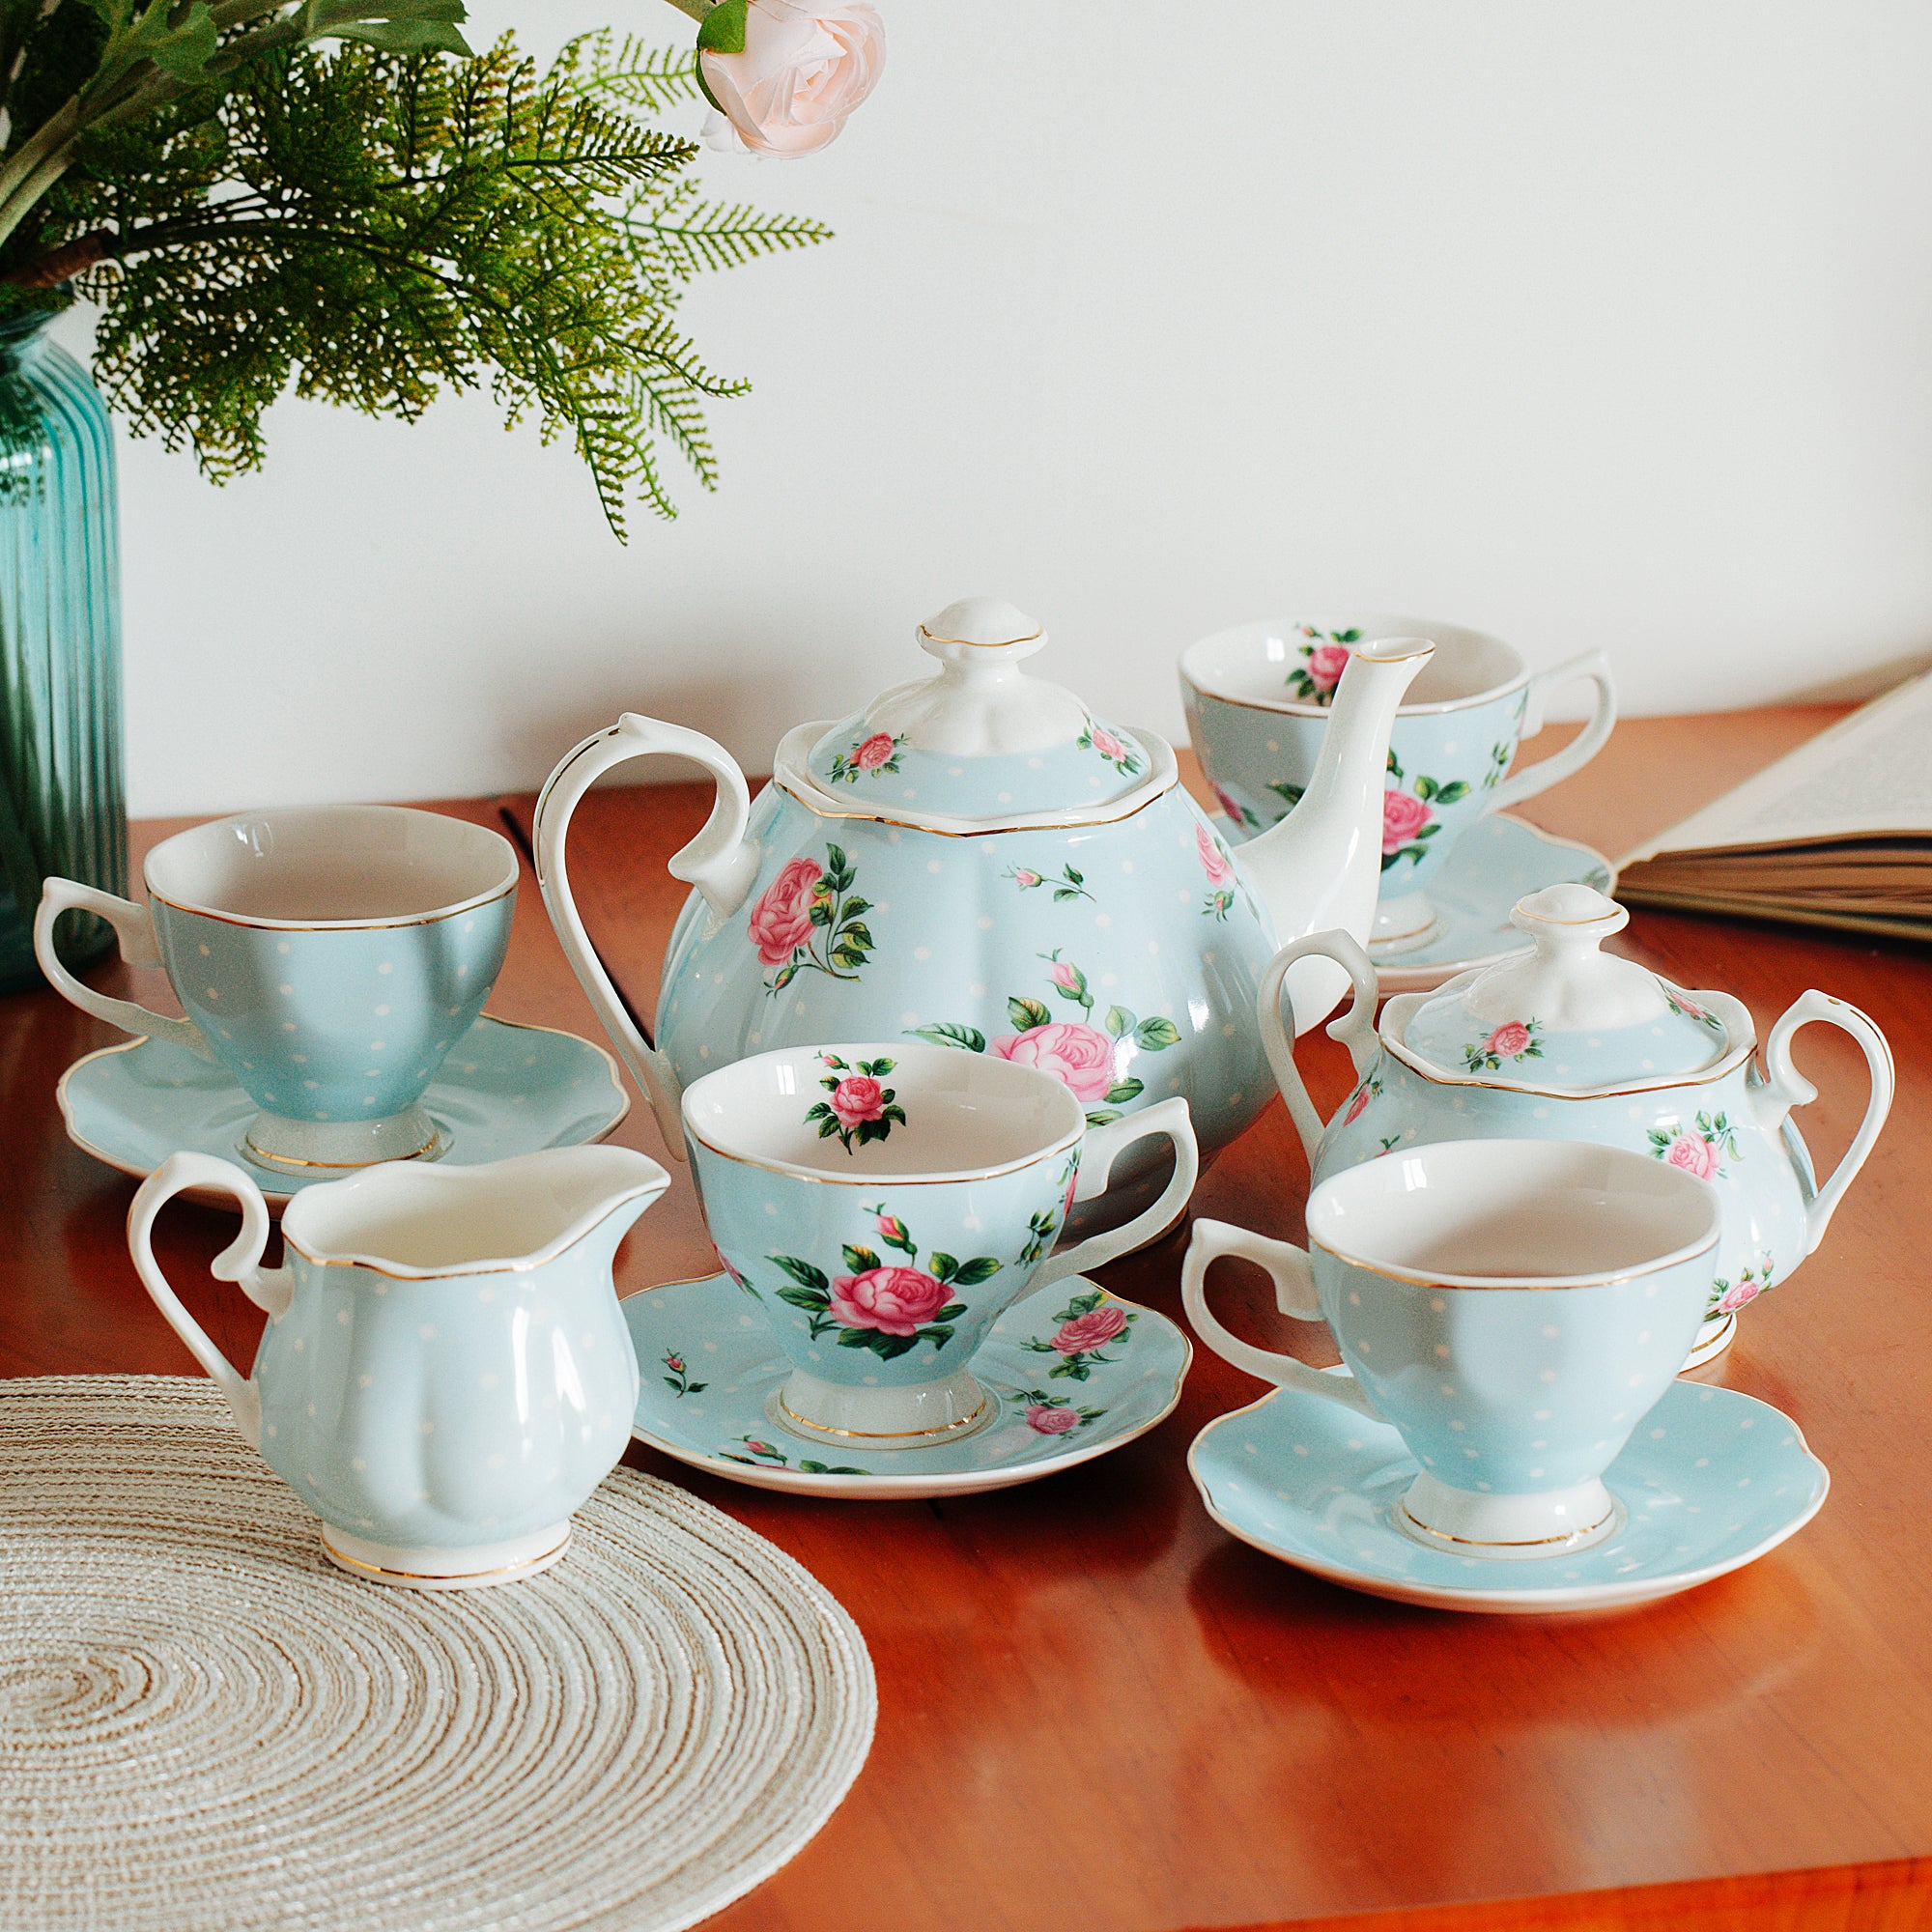 Set cup. Cup Saucer чайный сервиз. Fine Stoneware посуда чайный сервиз. Cups and Saucers Set сервиз. Чайный сервиз в одном стиле.